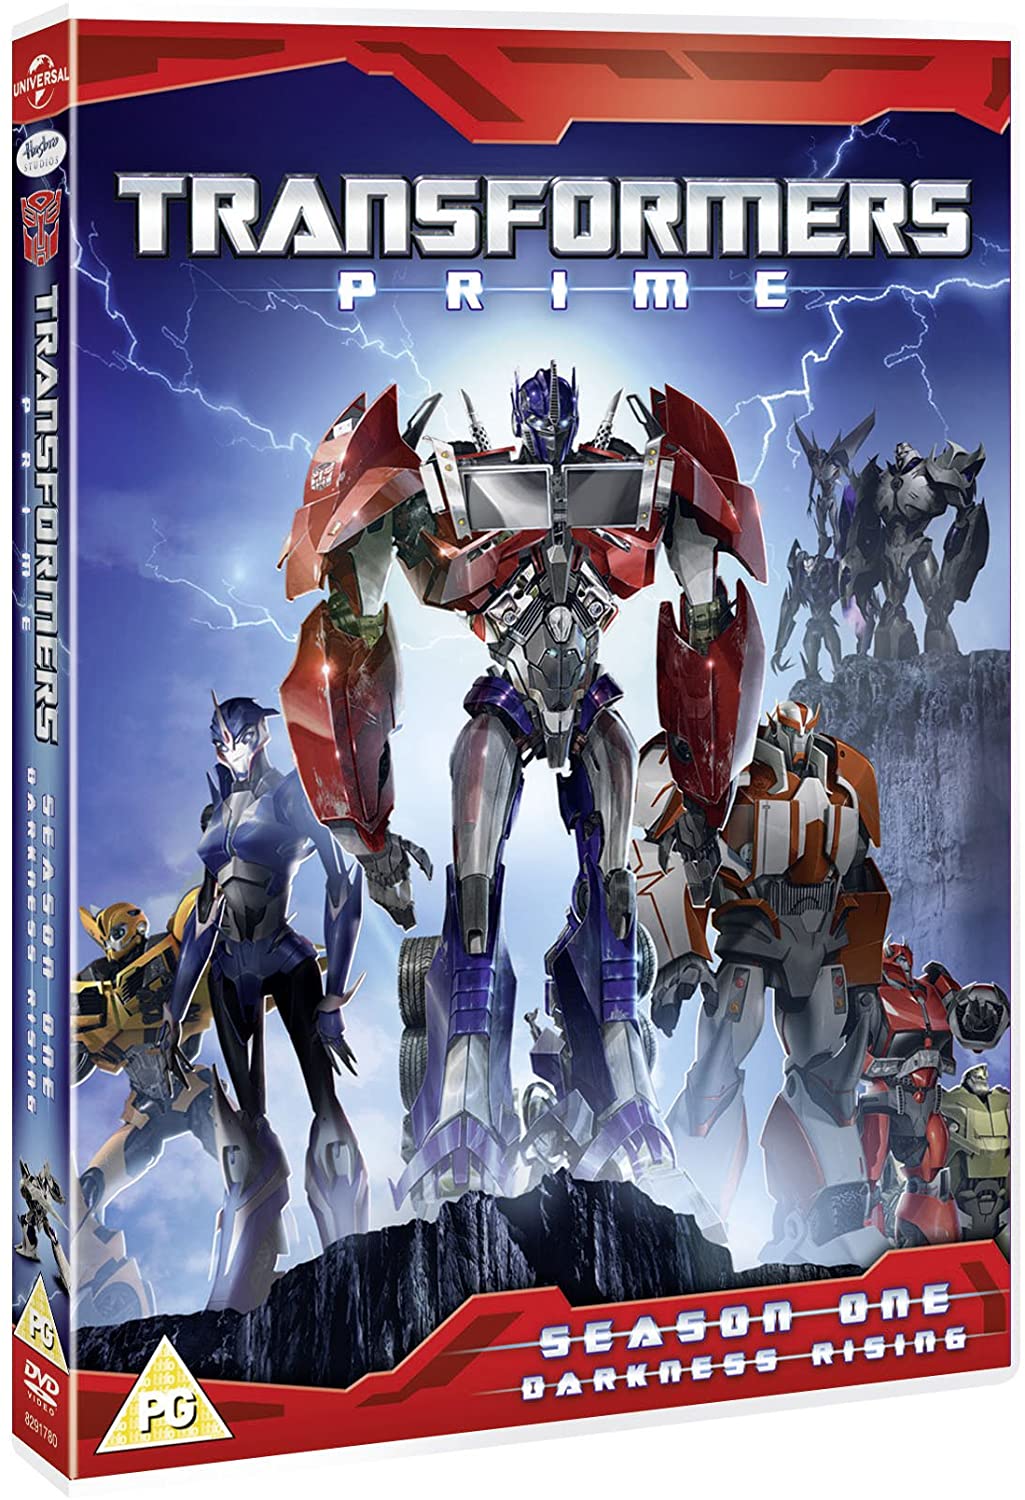 T1:E1 - Darkness Rising – Parte 1 - Transformers: Prime online no